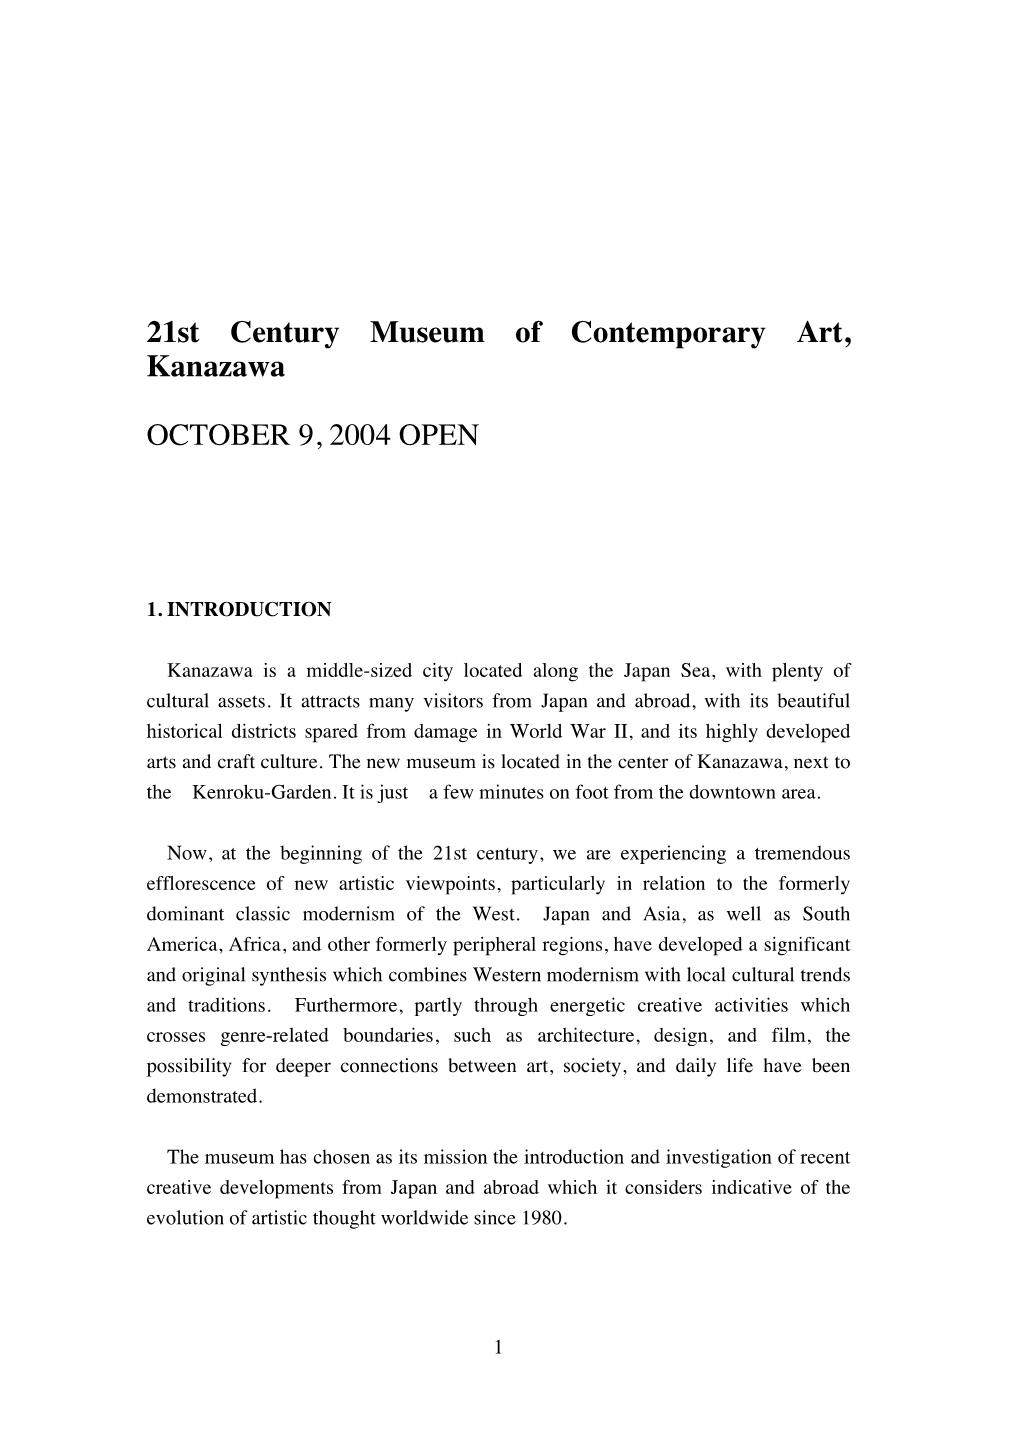 21St Century Museum of Contemporary Art, Kanazawa OCTOBER 9, 2004 OPEN